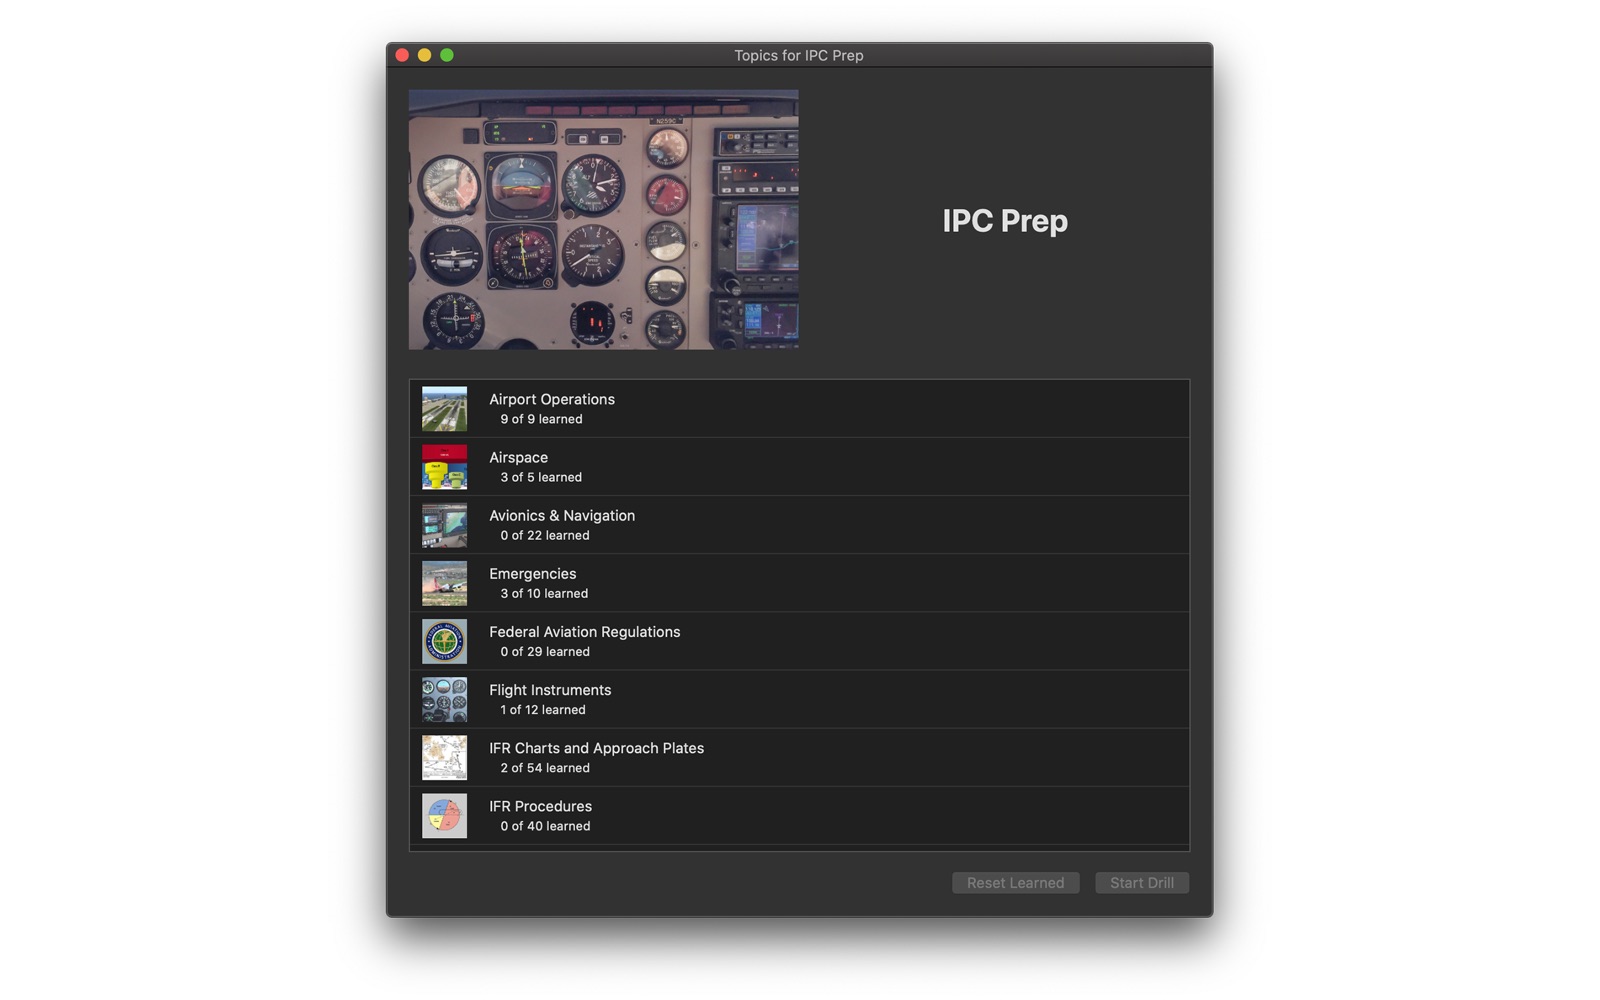 IPC Prep 4.0 : Main Window